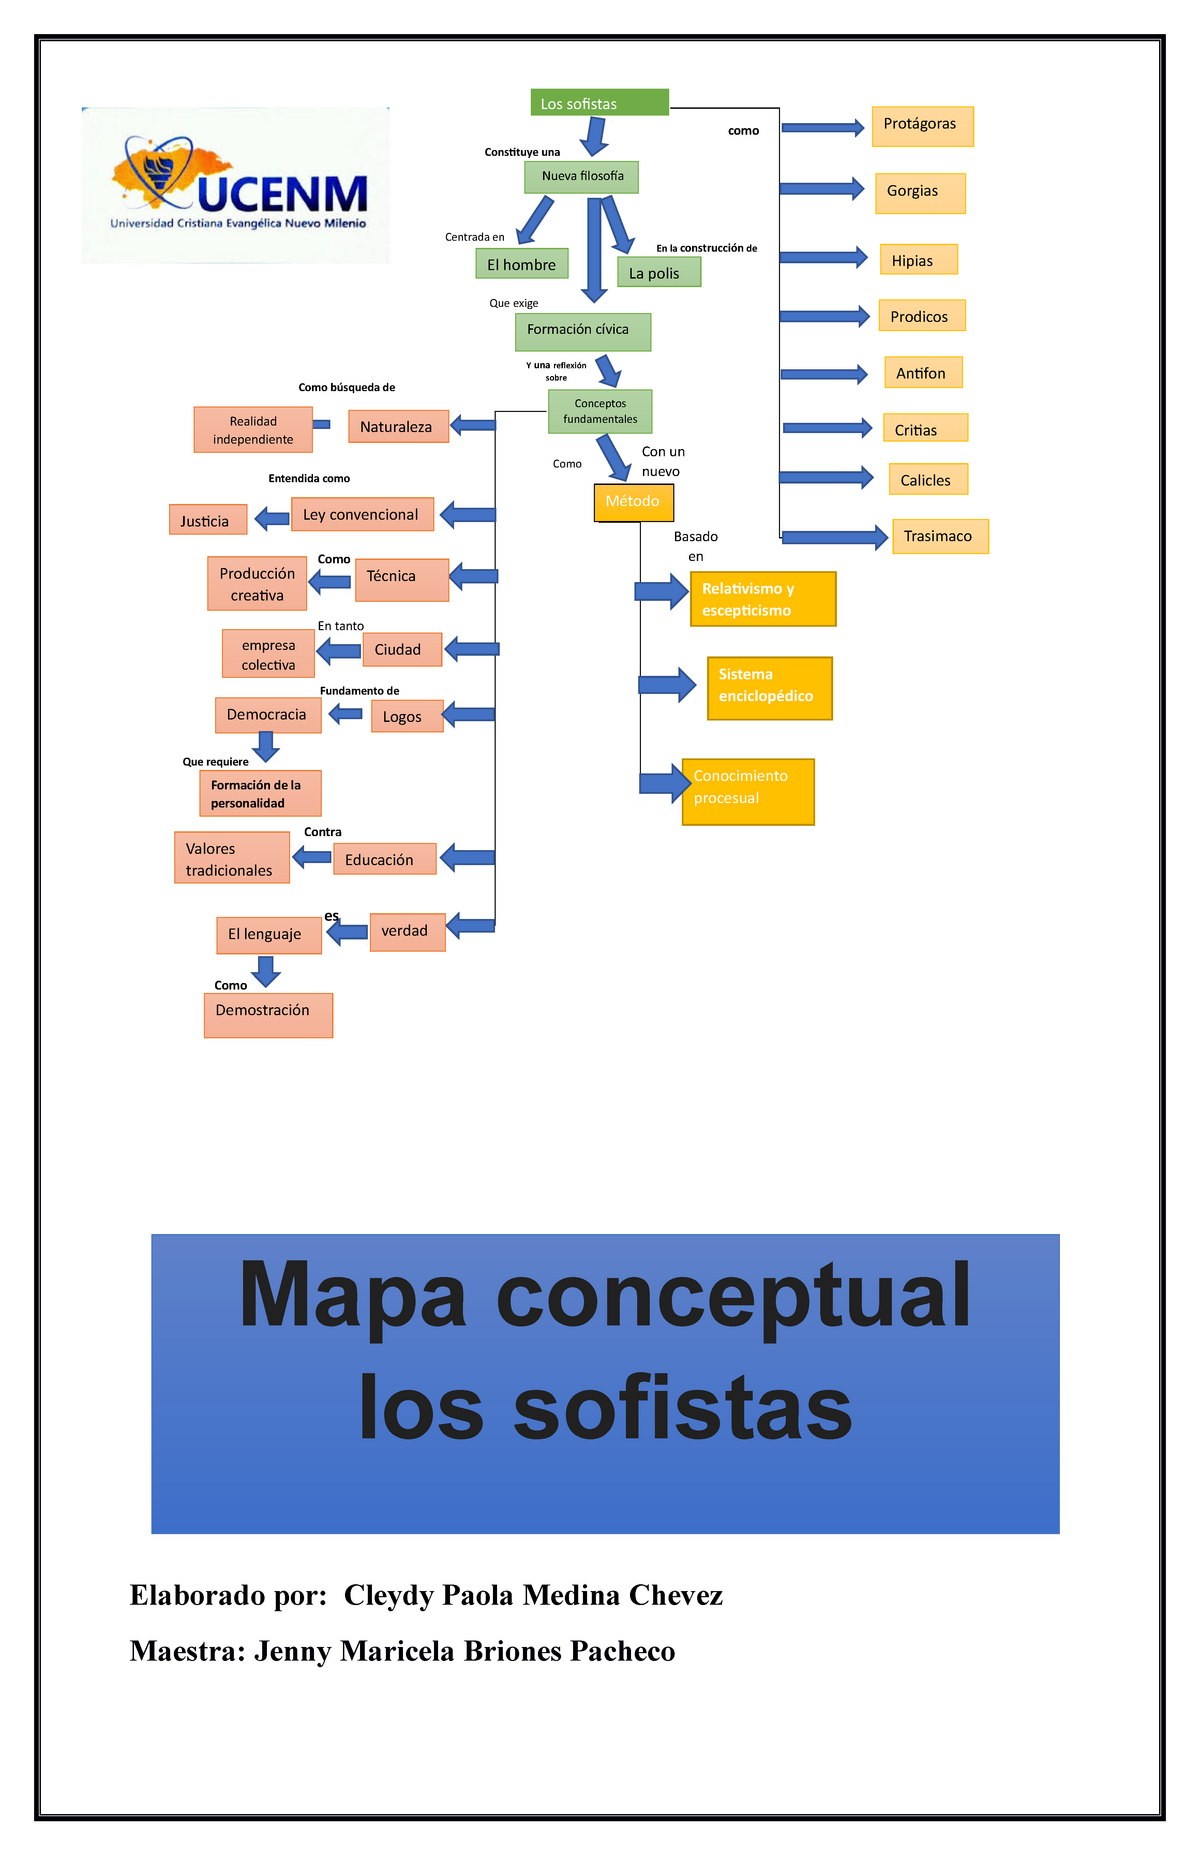 Mapa conceptual sofistas - Elaborado por: Cleydy Paola Medina Chevez  Maestra: Jenny Maricela Briones - Studocu